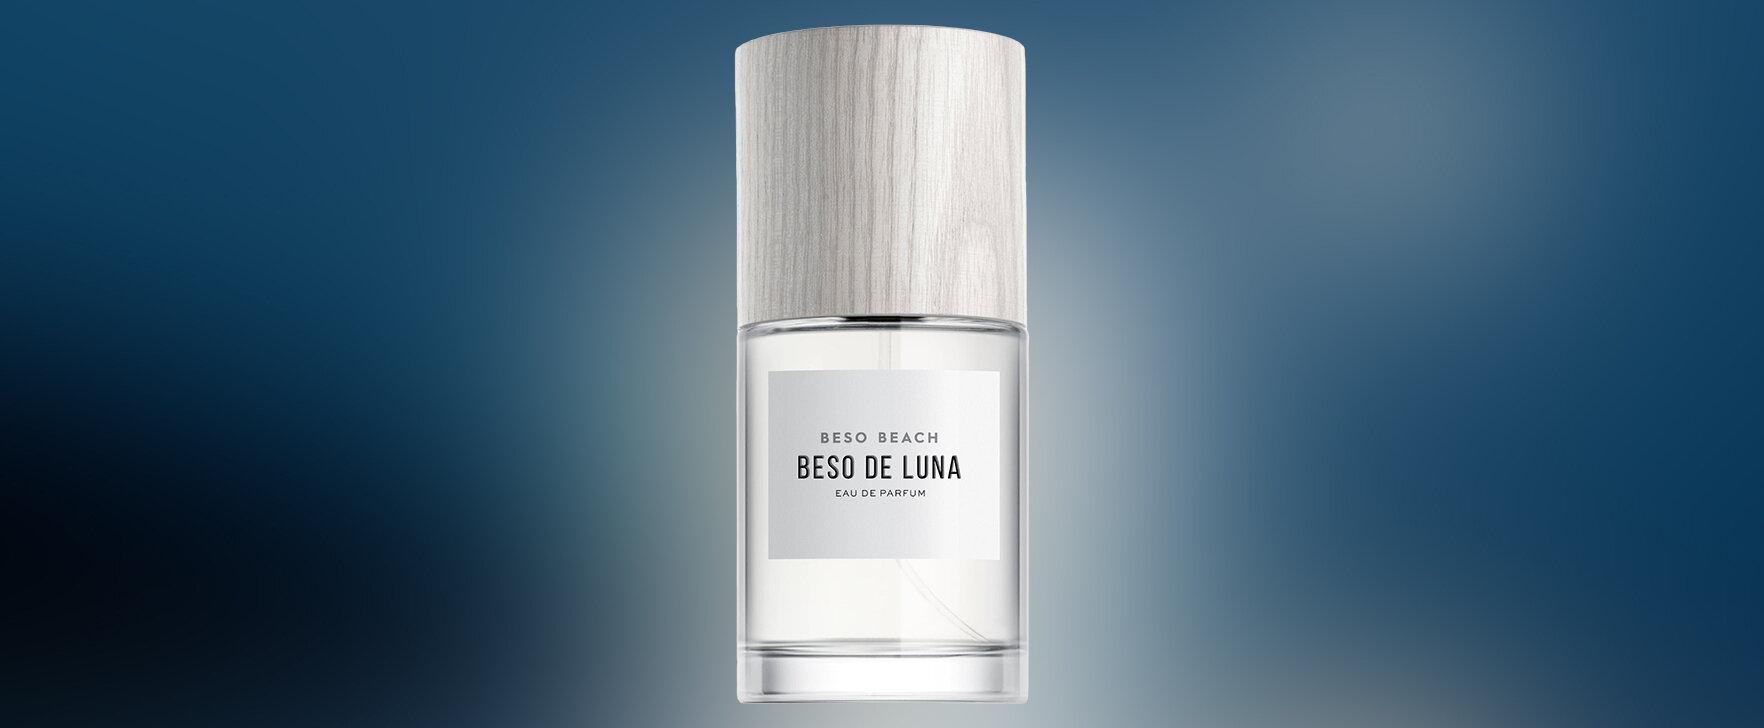 Inspired by Moonlight: The New Eau de Parfum "Beso de Luna" by Beso Beach 